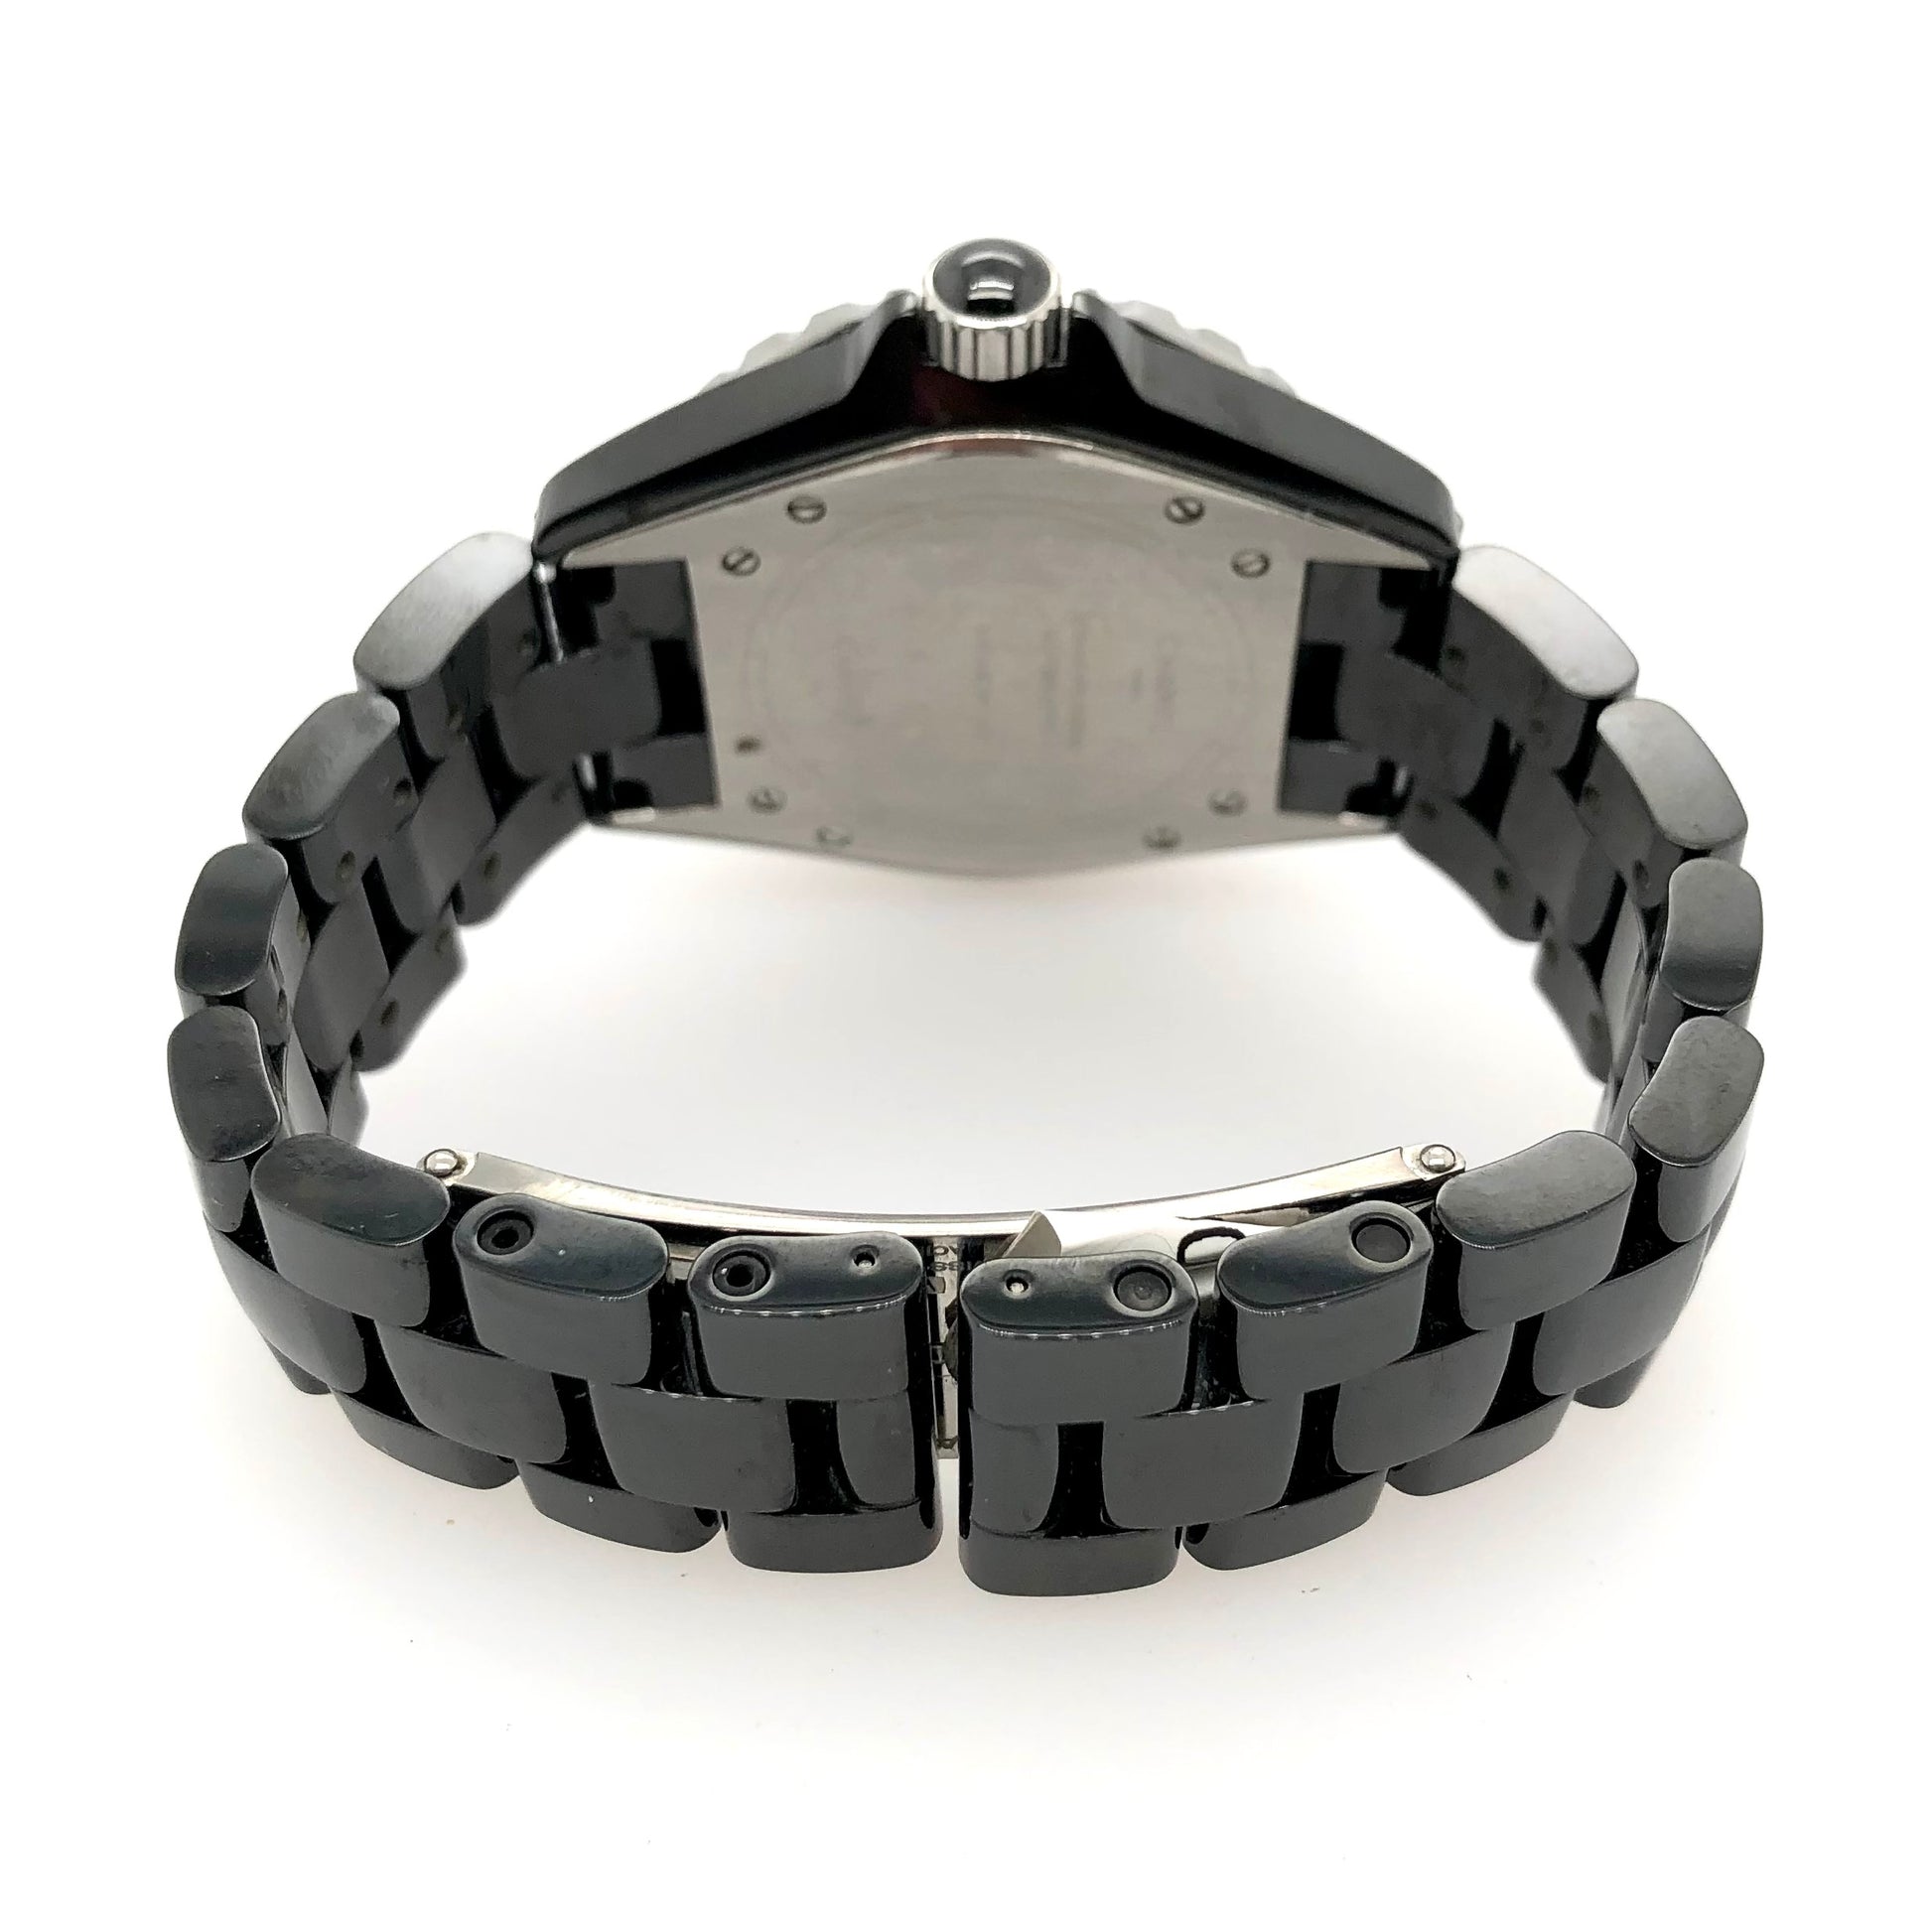 CHANEL J12 Automatic 32mm Black Ceramics & Steel Watch